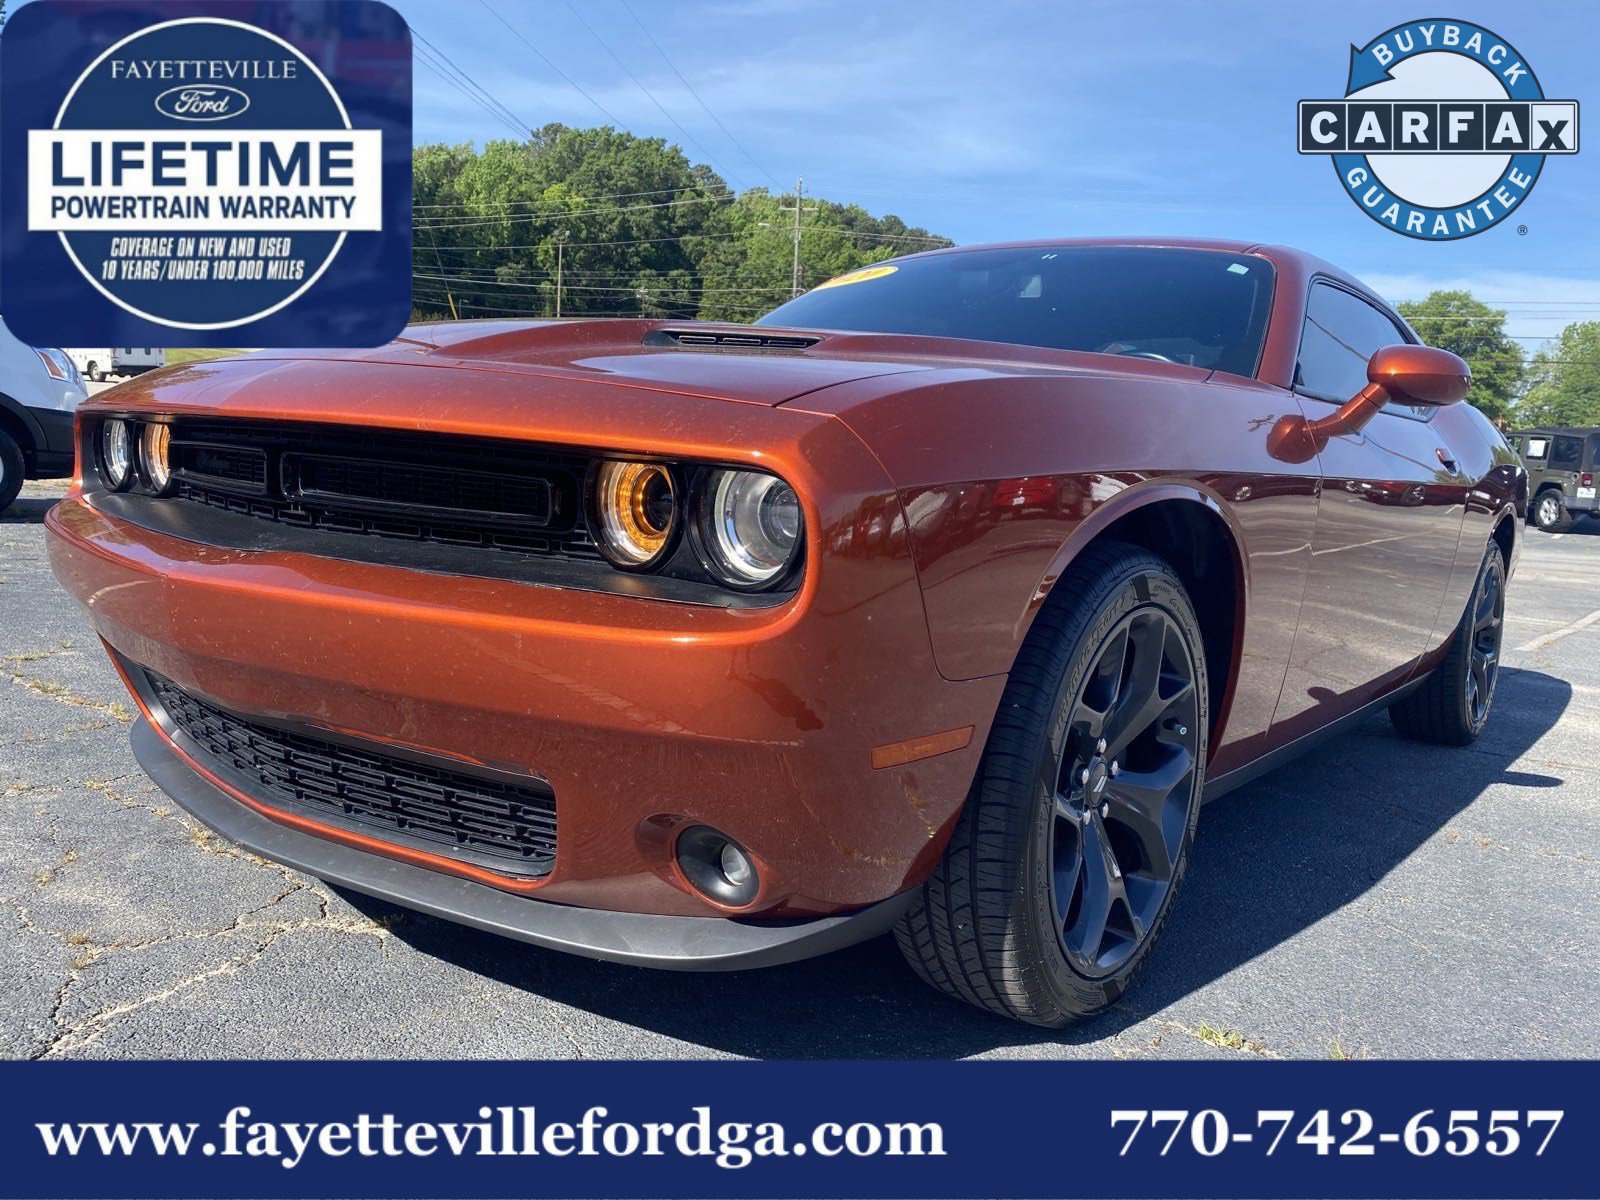 2020 Dodge Challenger Fayetteville GA